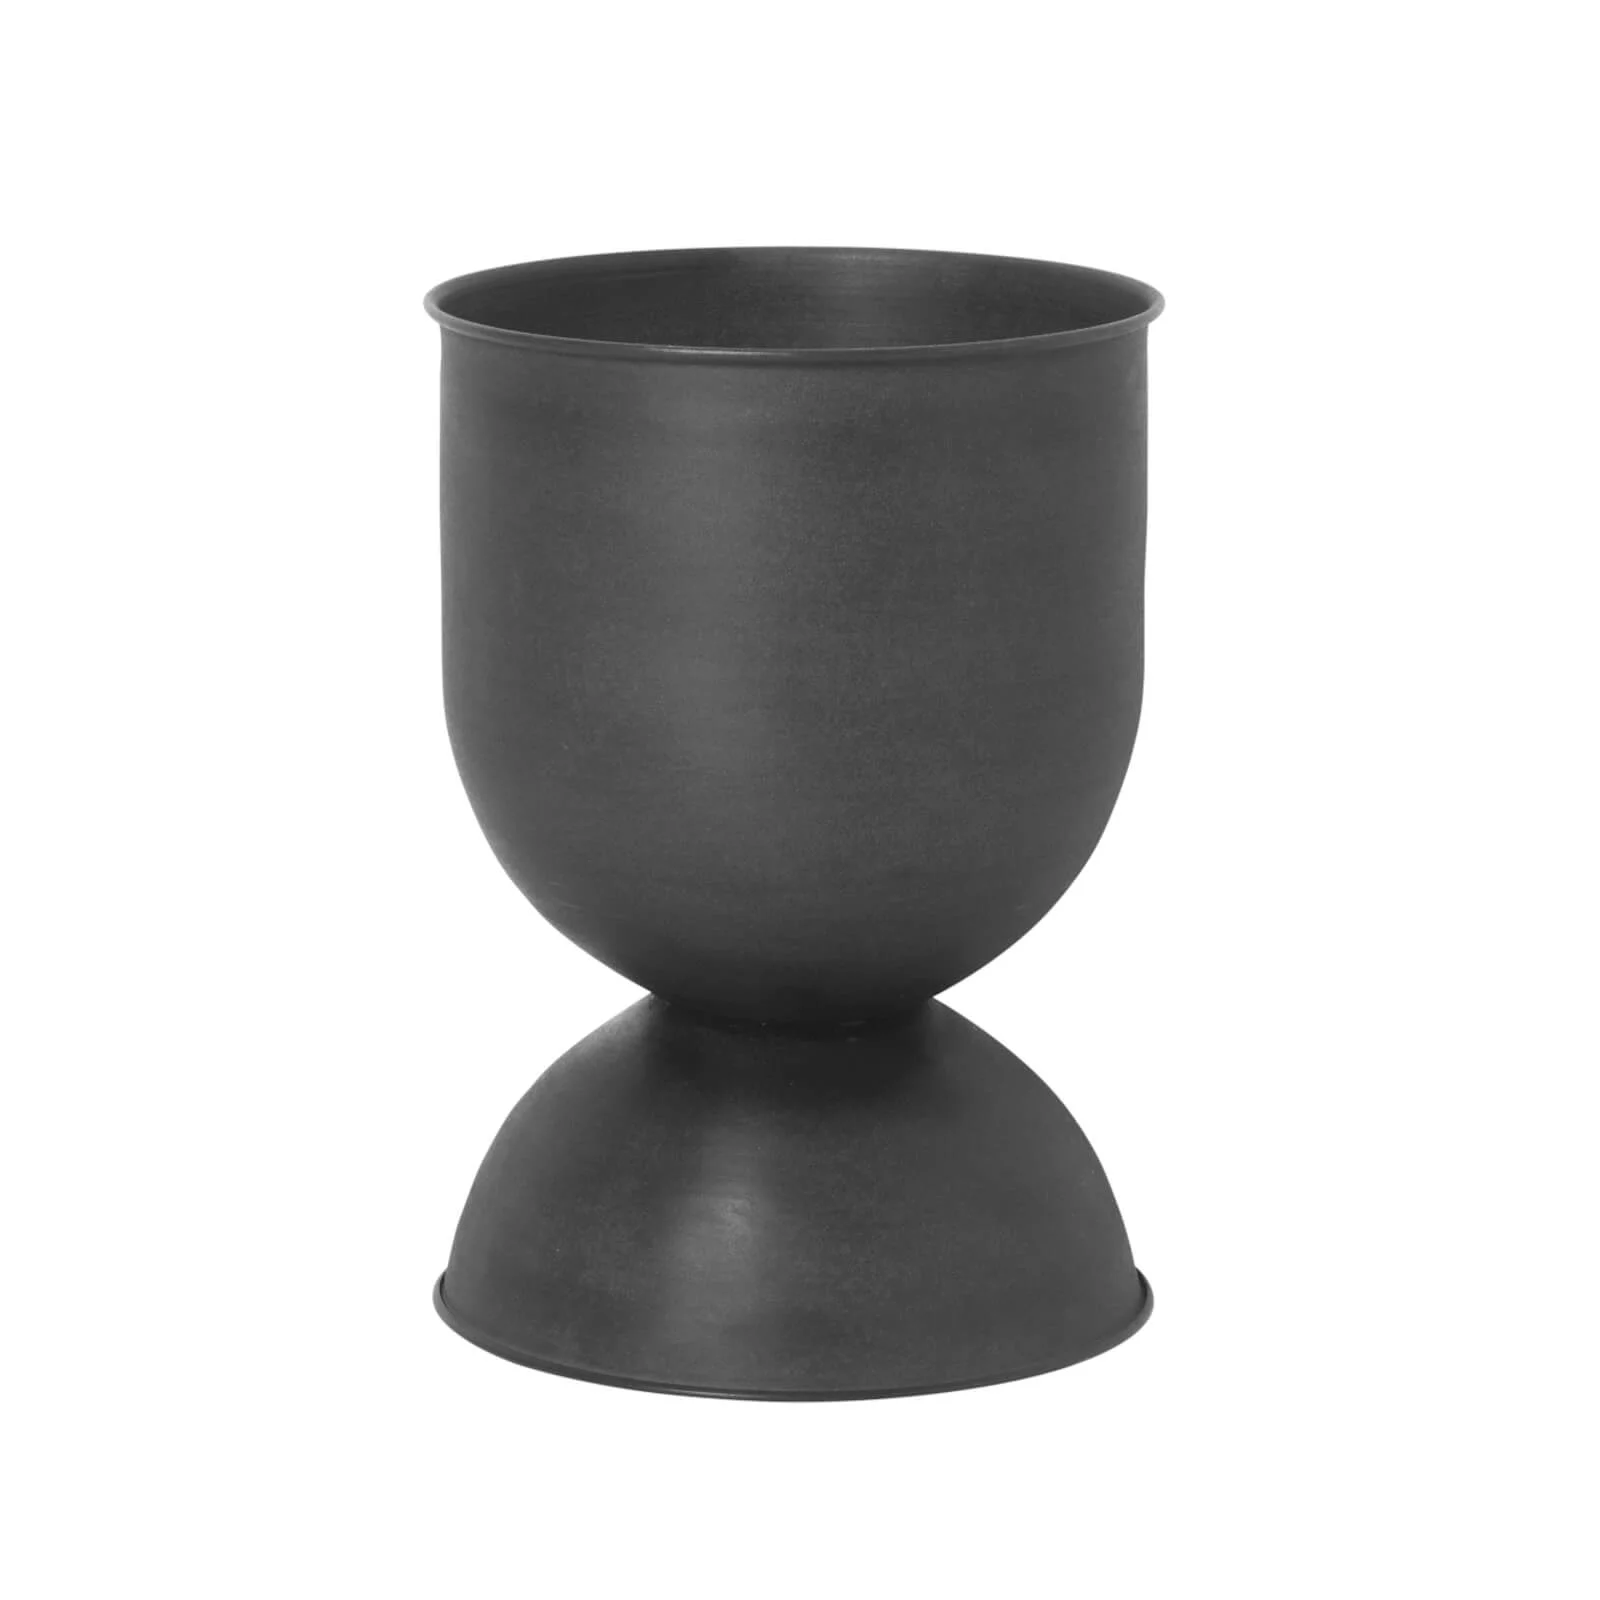 Ferm Living Hourglass Pot - Black/Dark Grey - Small Image 1